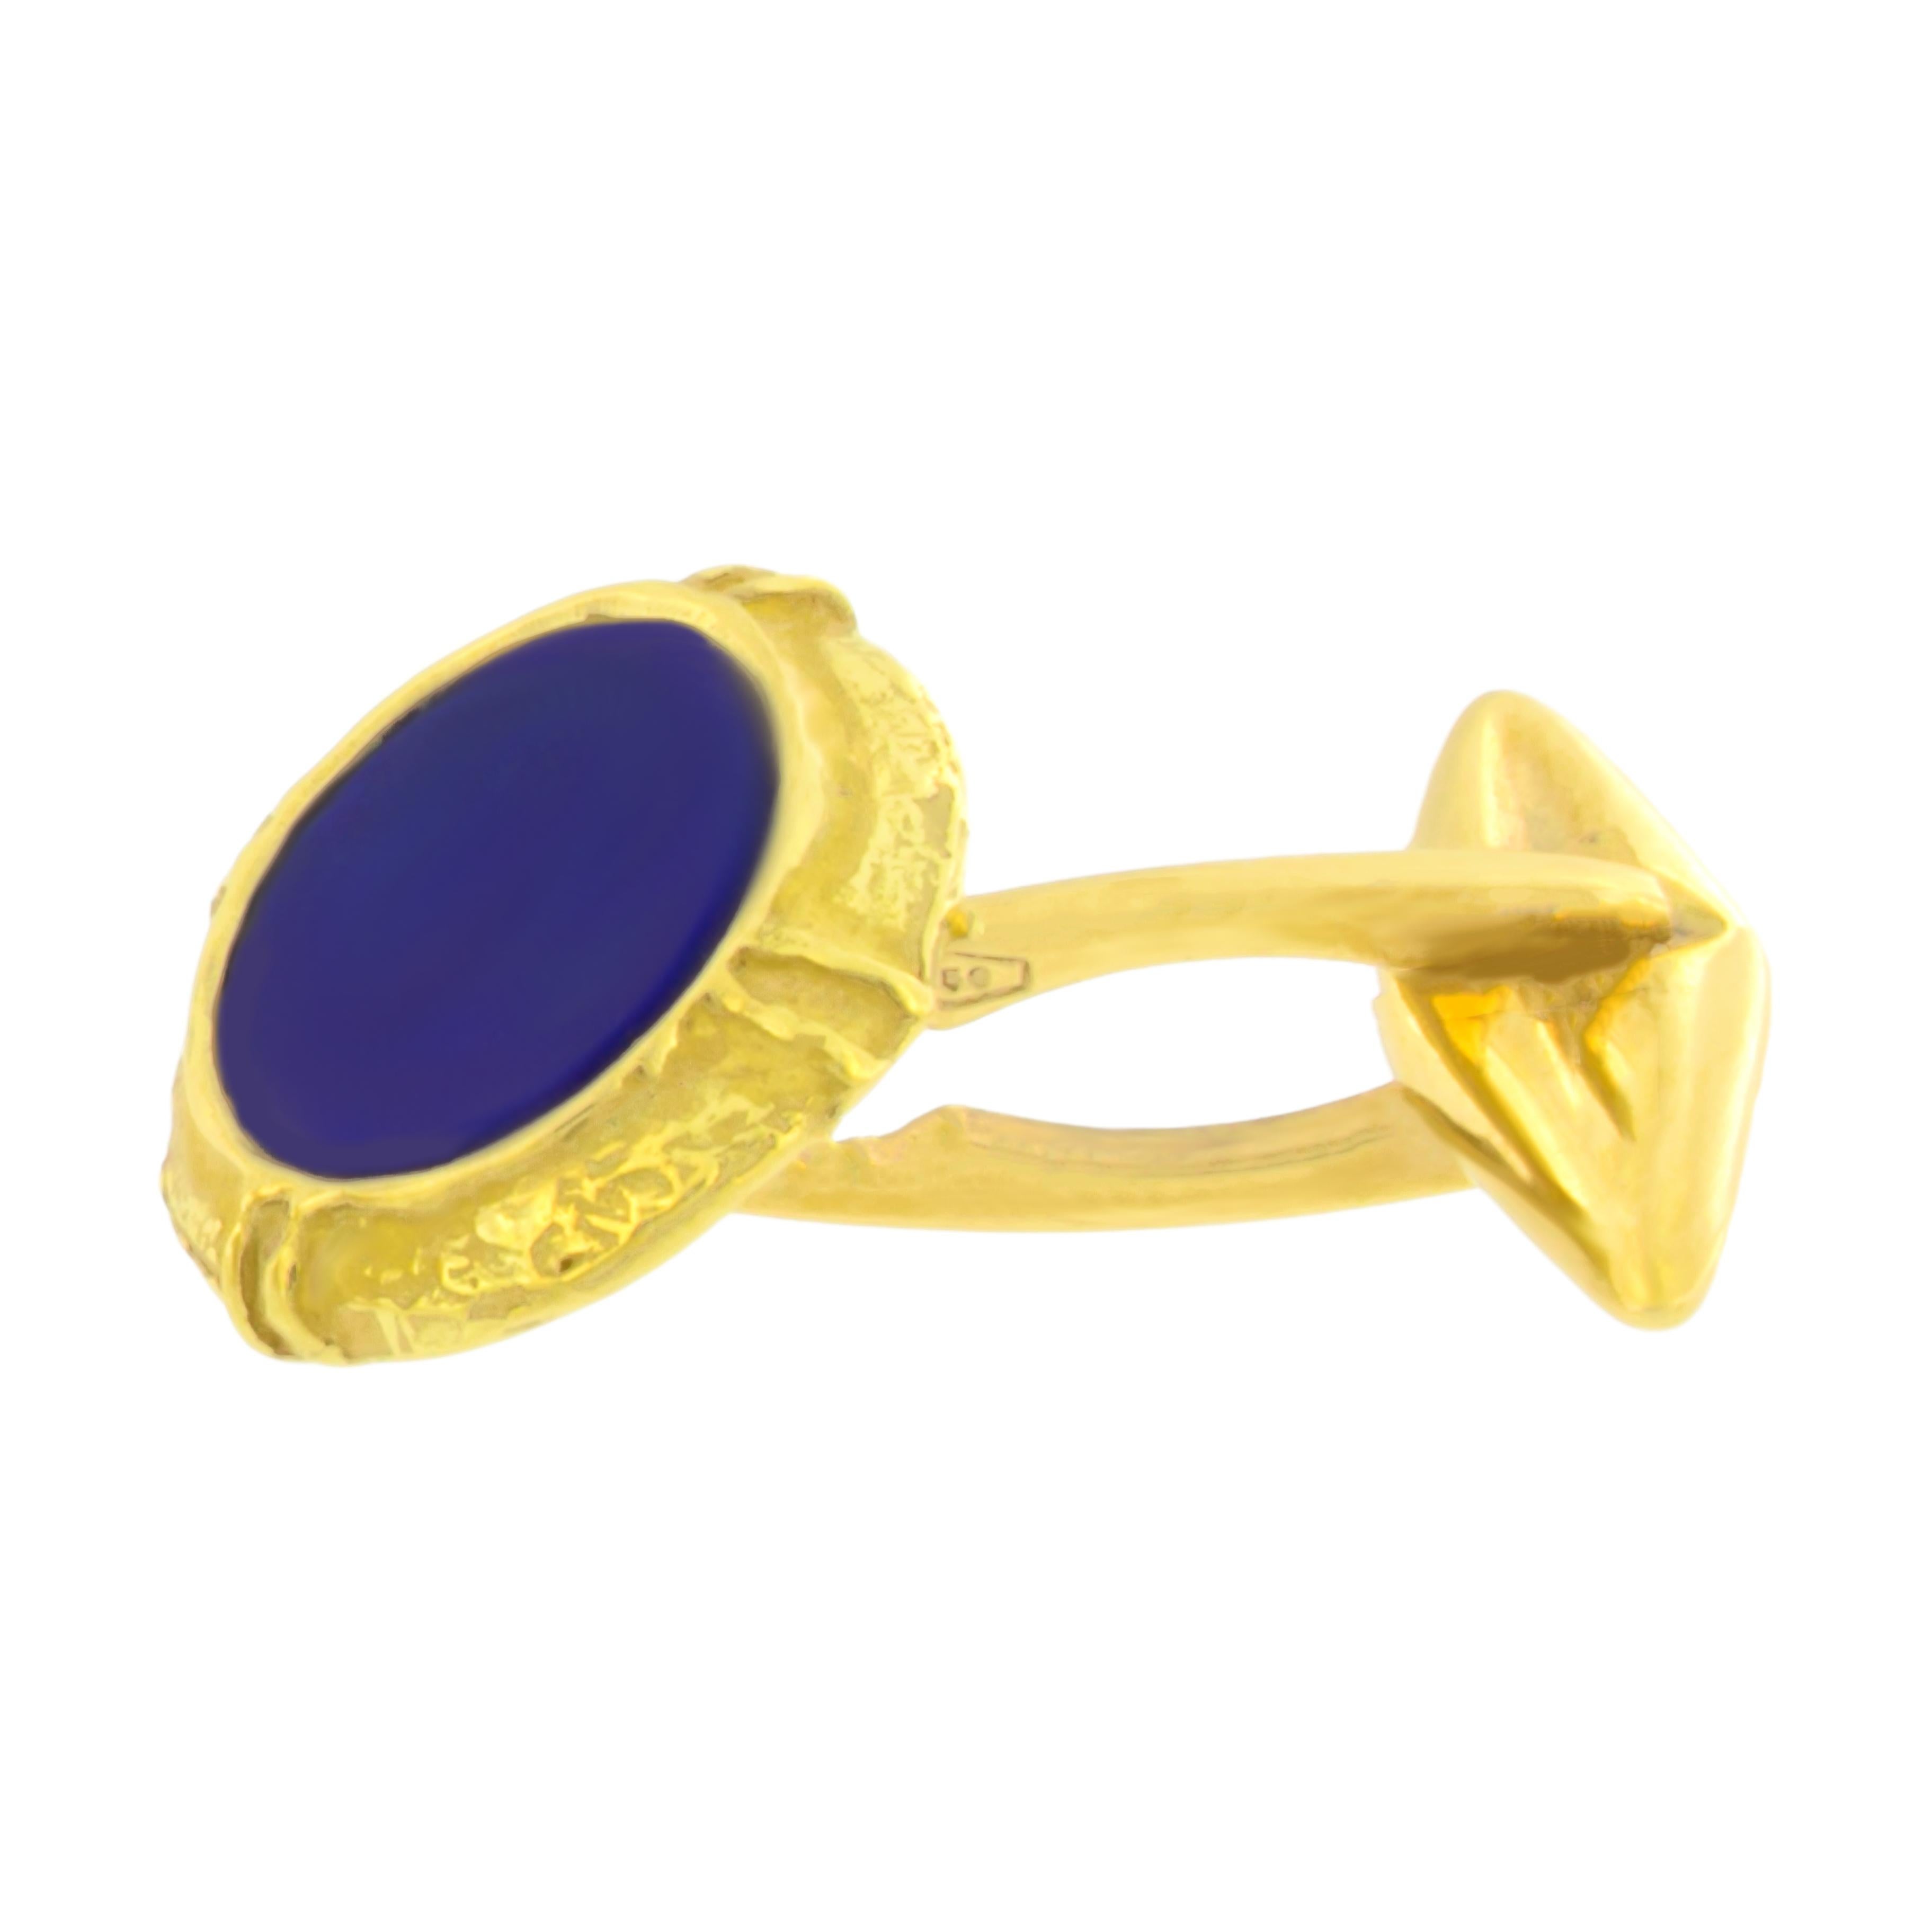 Oval Cut Sacchi Lapis Lazuli Gemstone 18 Karat Satin Yellow Gold Oval Cufflinks